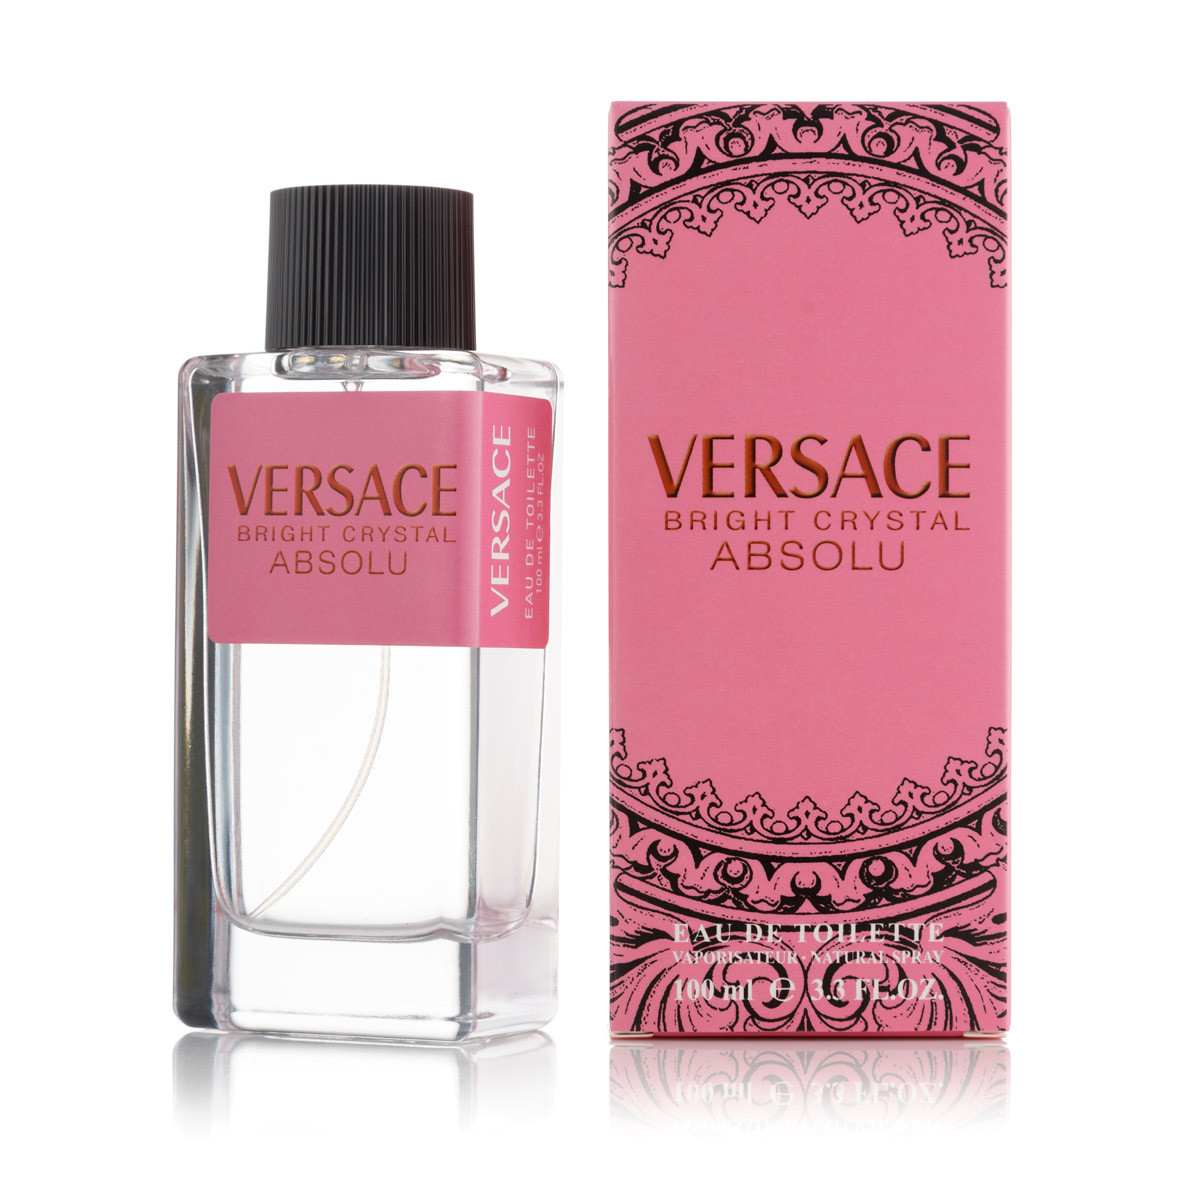 100 мл туалетная вода Versace Bright Crystal Absolu - Ж (new)